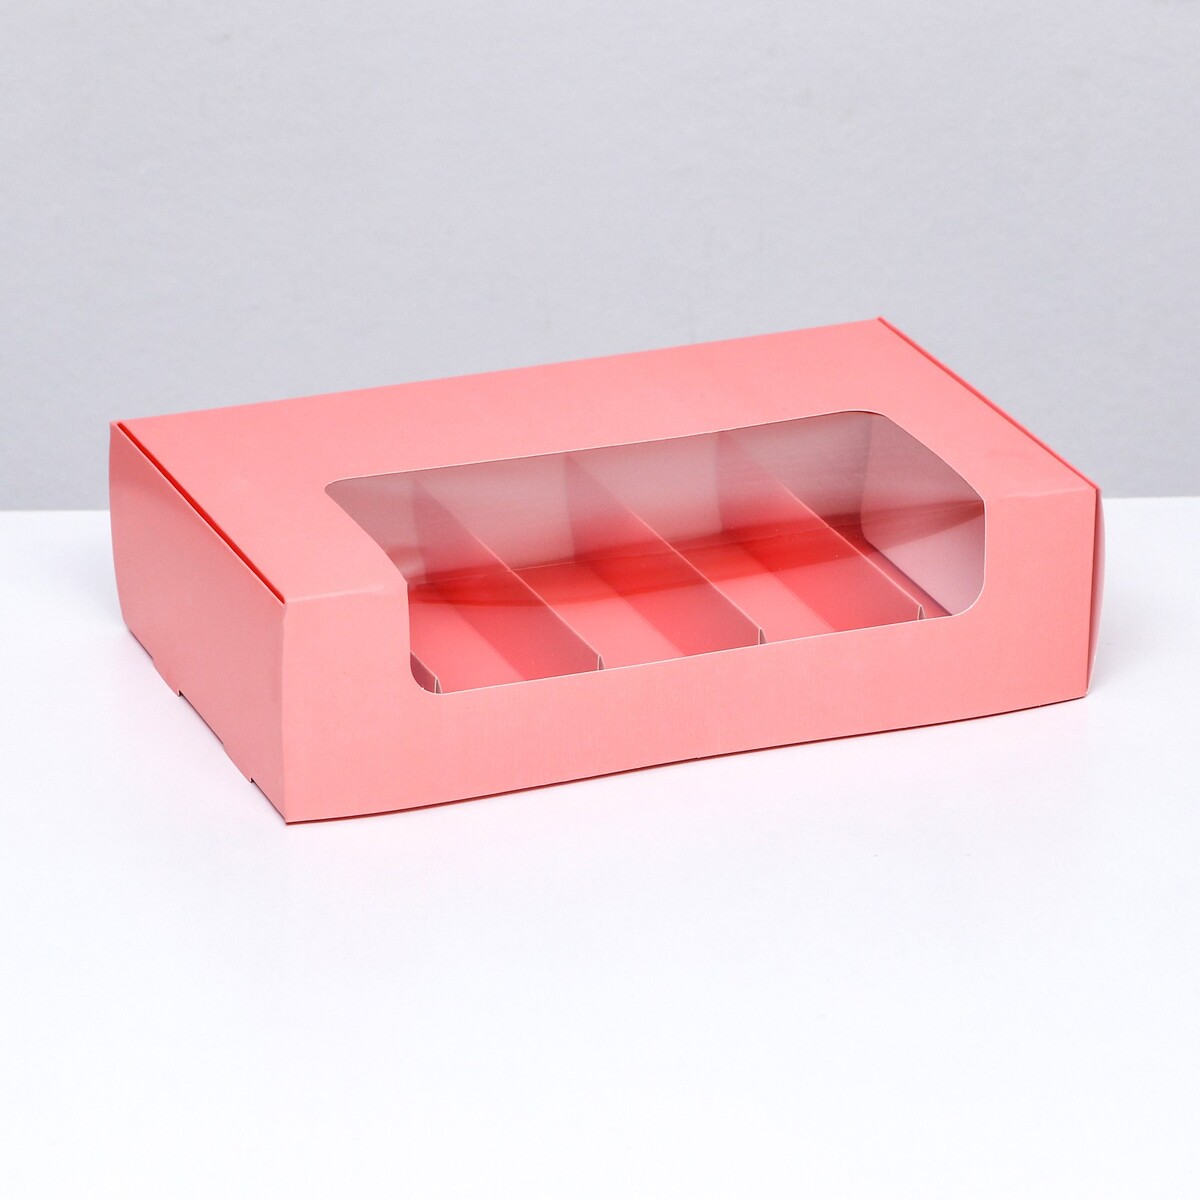 Коробка складная, под 5 эклеров розовый, 25 х 15 х 6,6 см коробка складная под 5 эклеров розовый 25 х 15 х 6 6 см